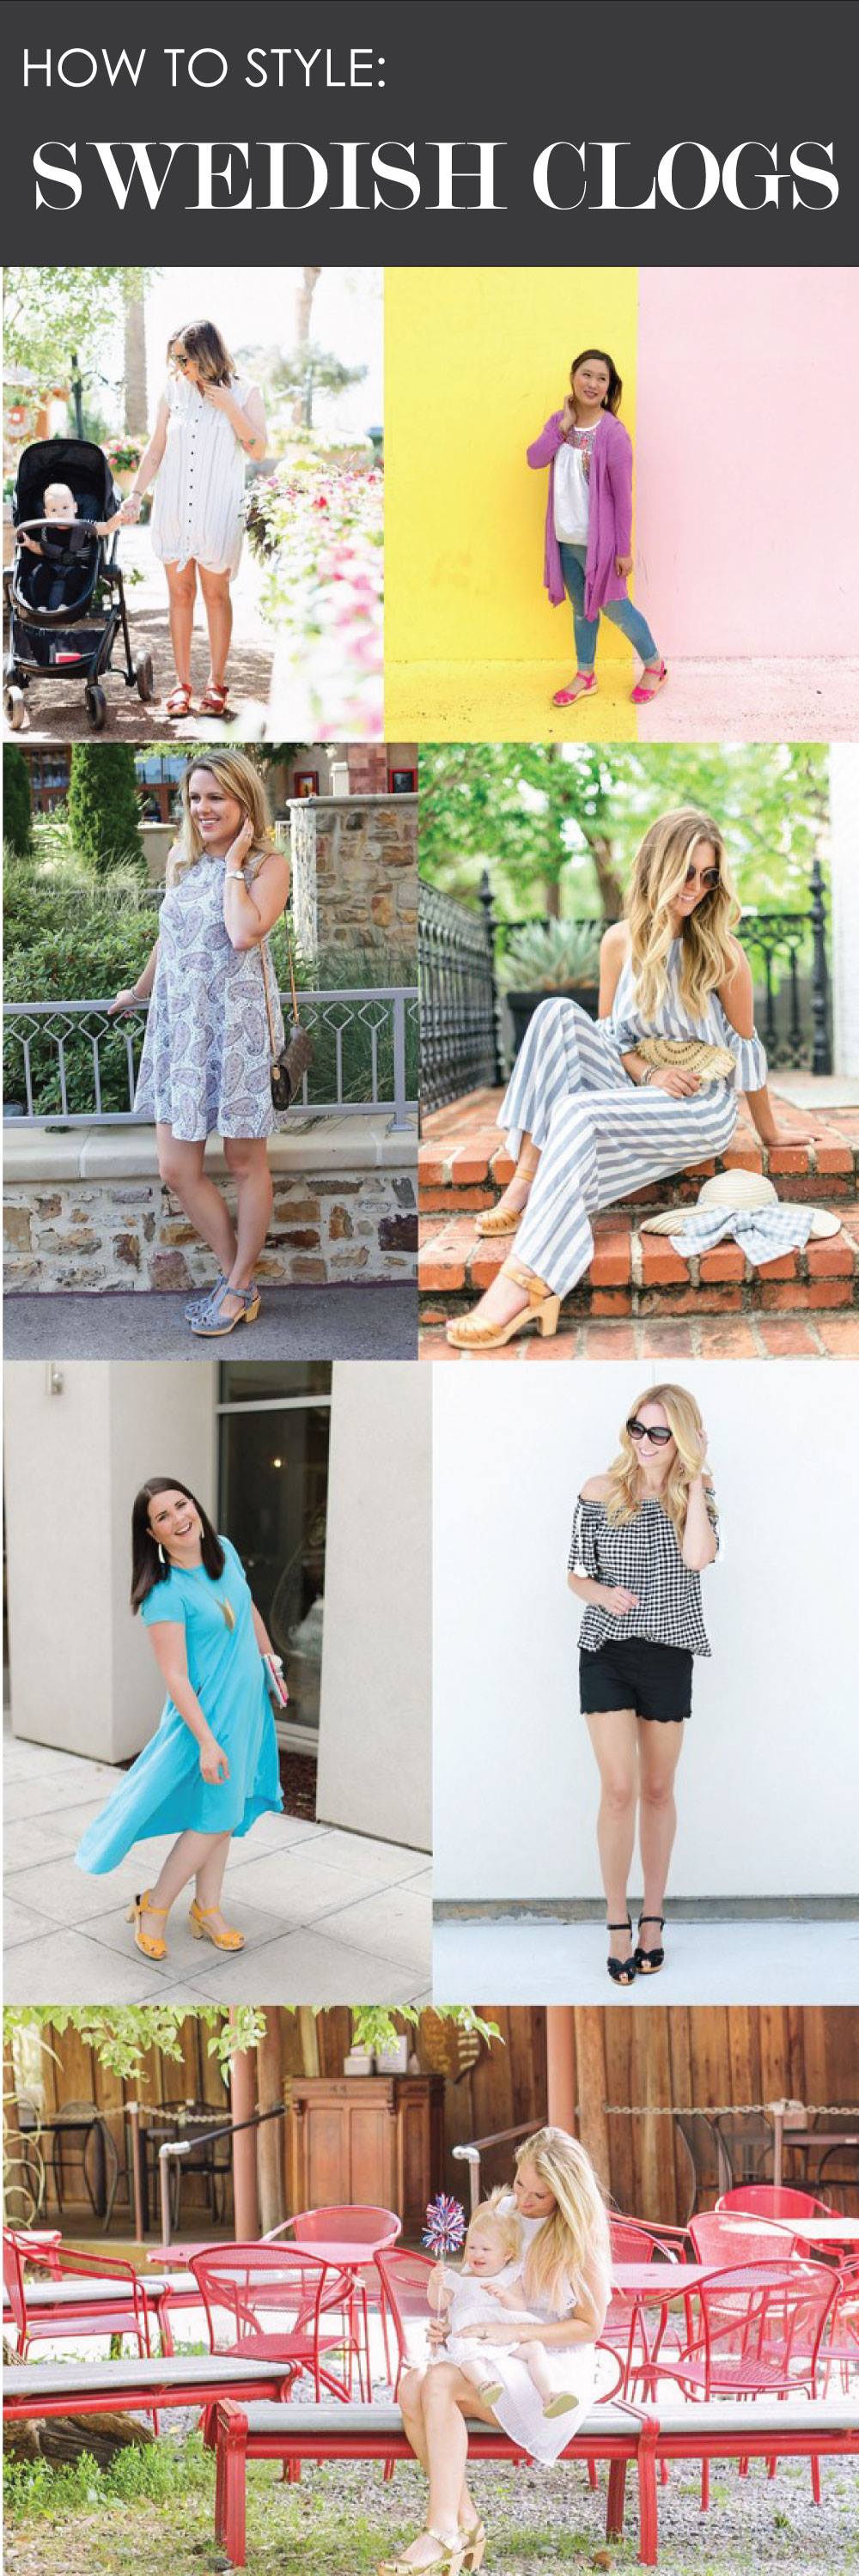 7 Ways to Style Swedish Clogs by Atlanta blogger Jessica of Happily Hughes